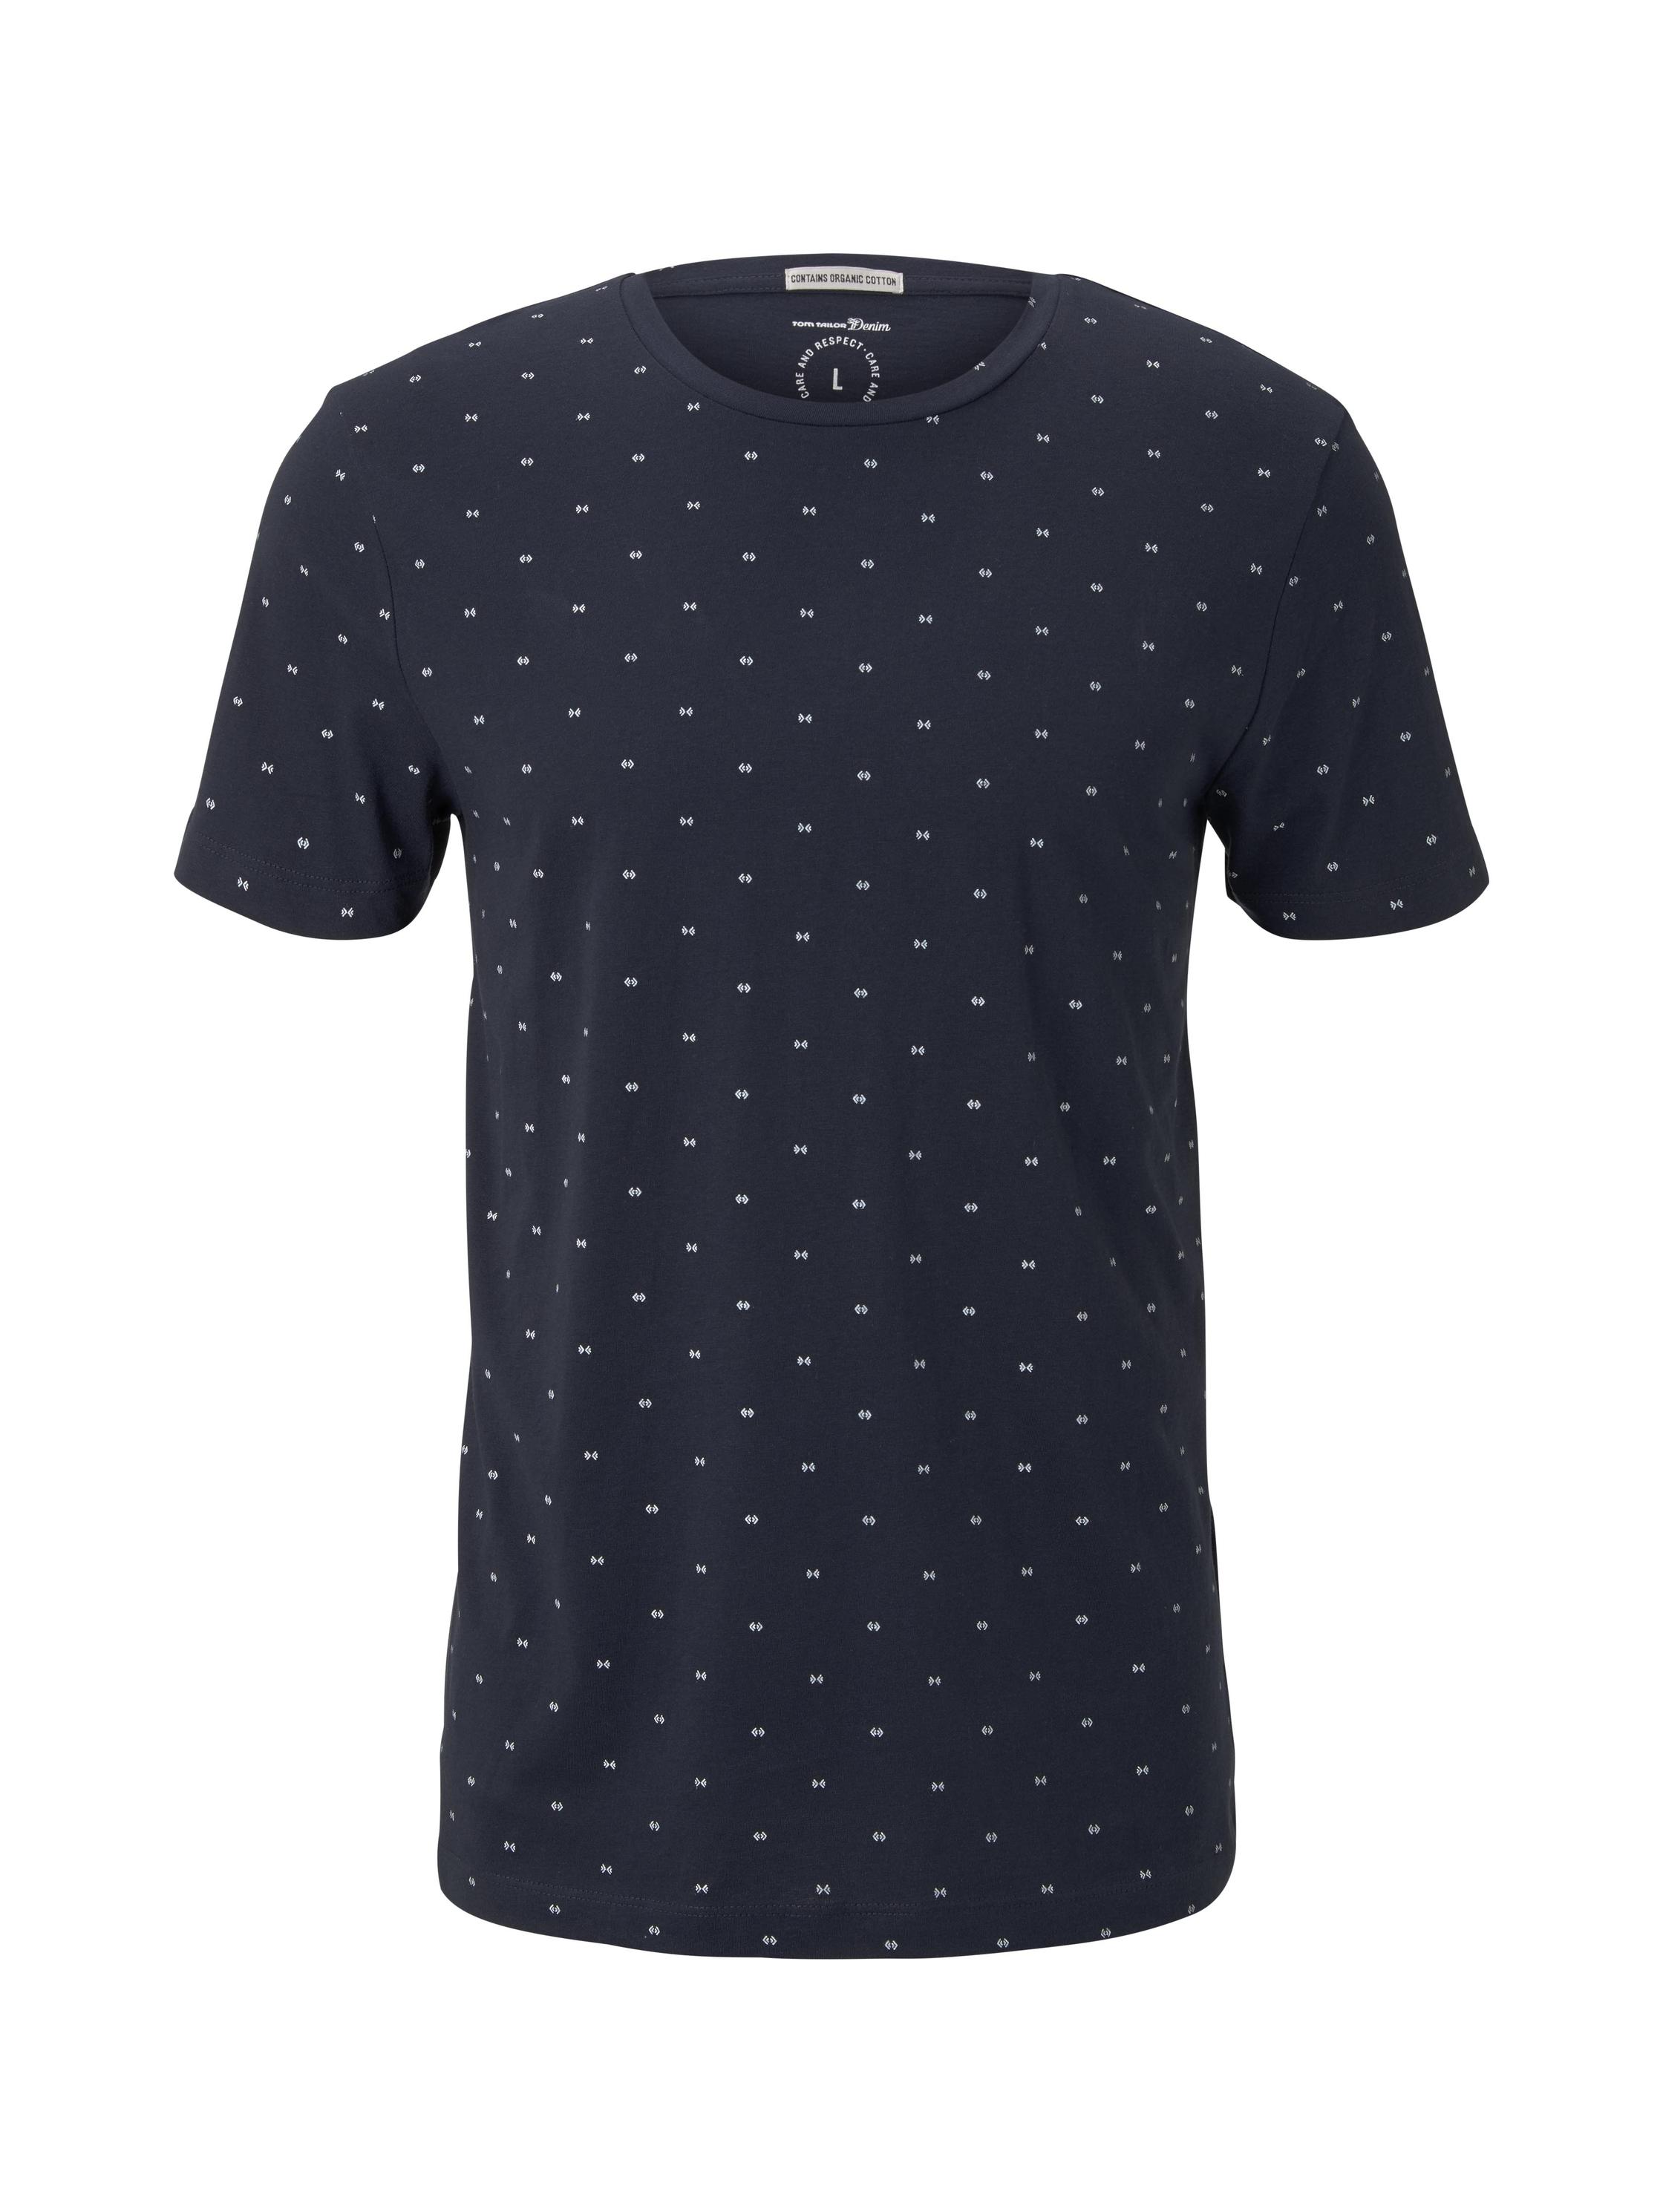 alloverprinted T-shirt, navy small element print